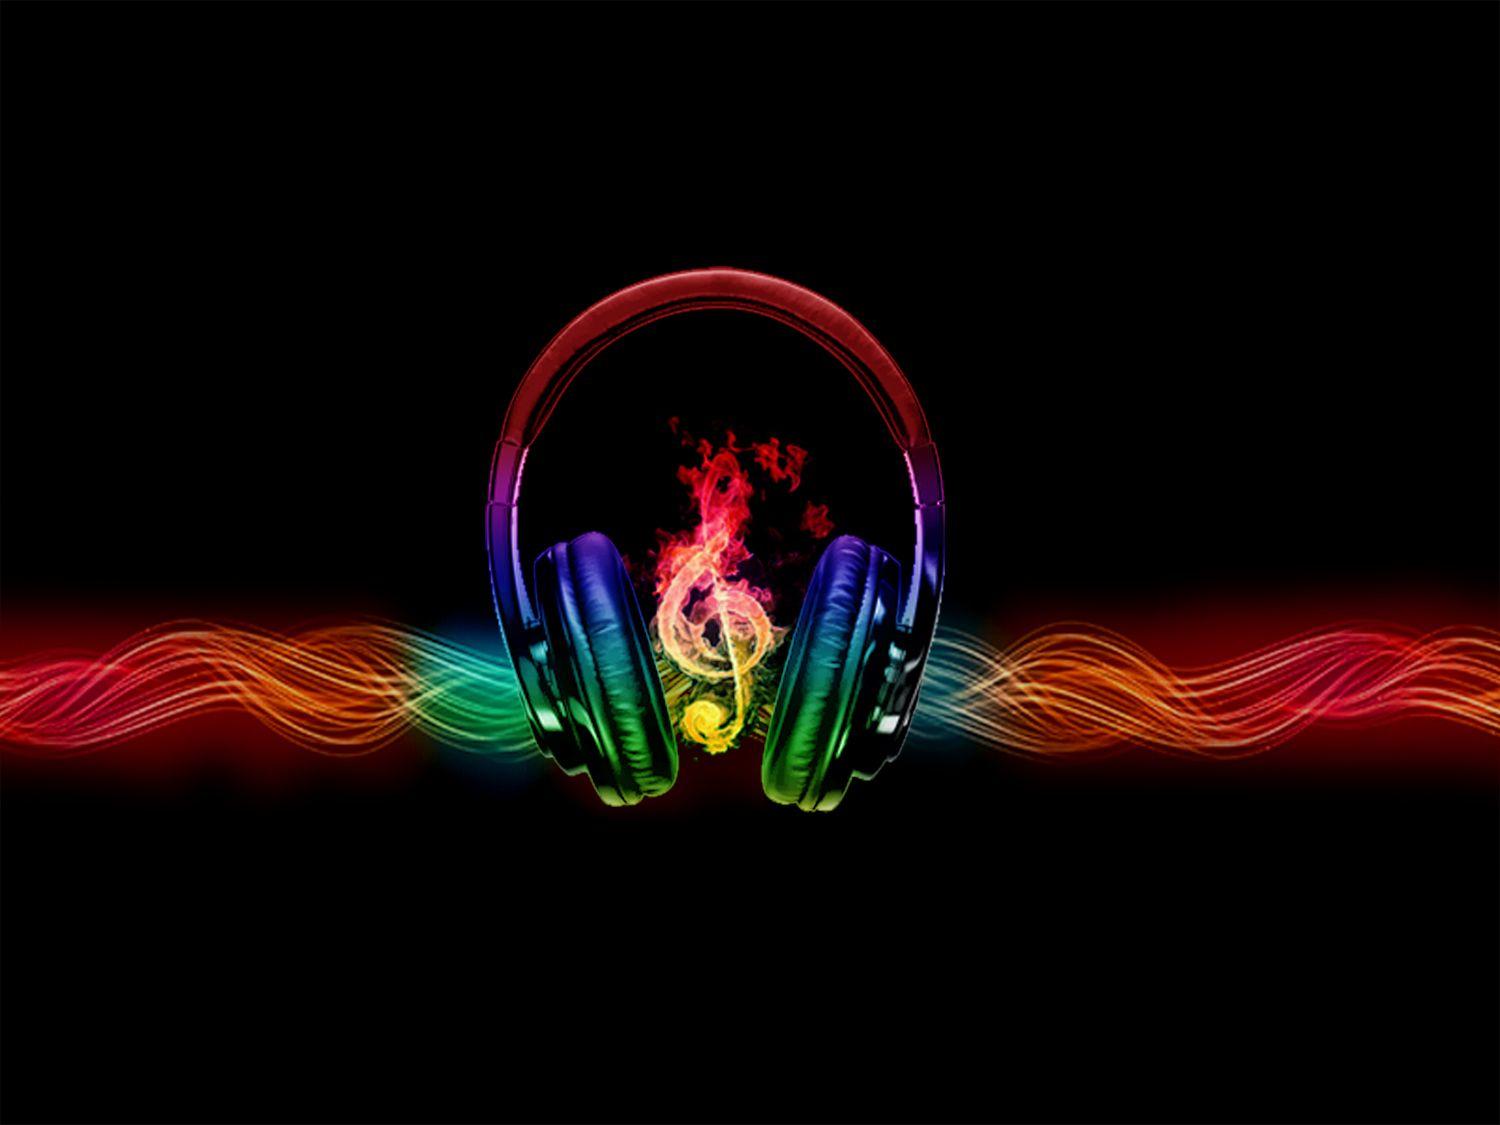 Headphones With Music Wallpaper. Music wallpaper, Music headphones, Wallpaper